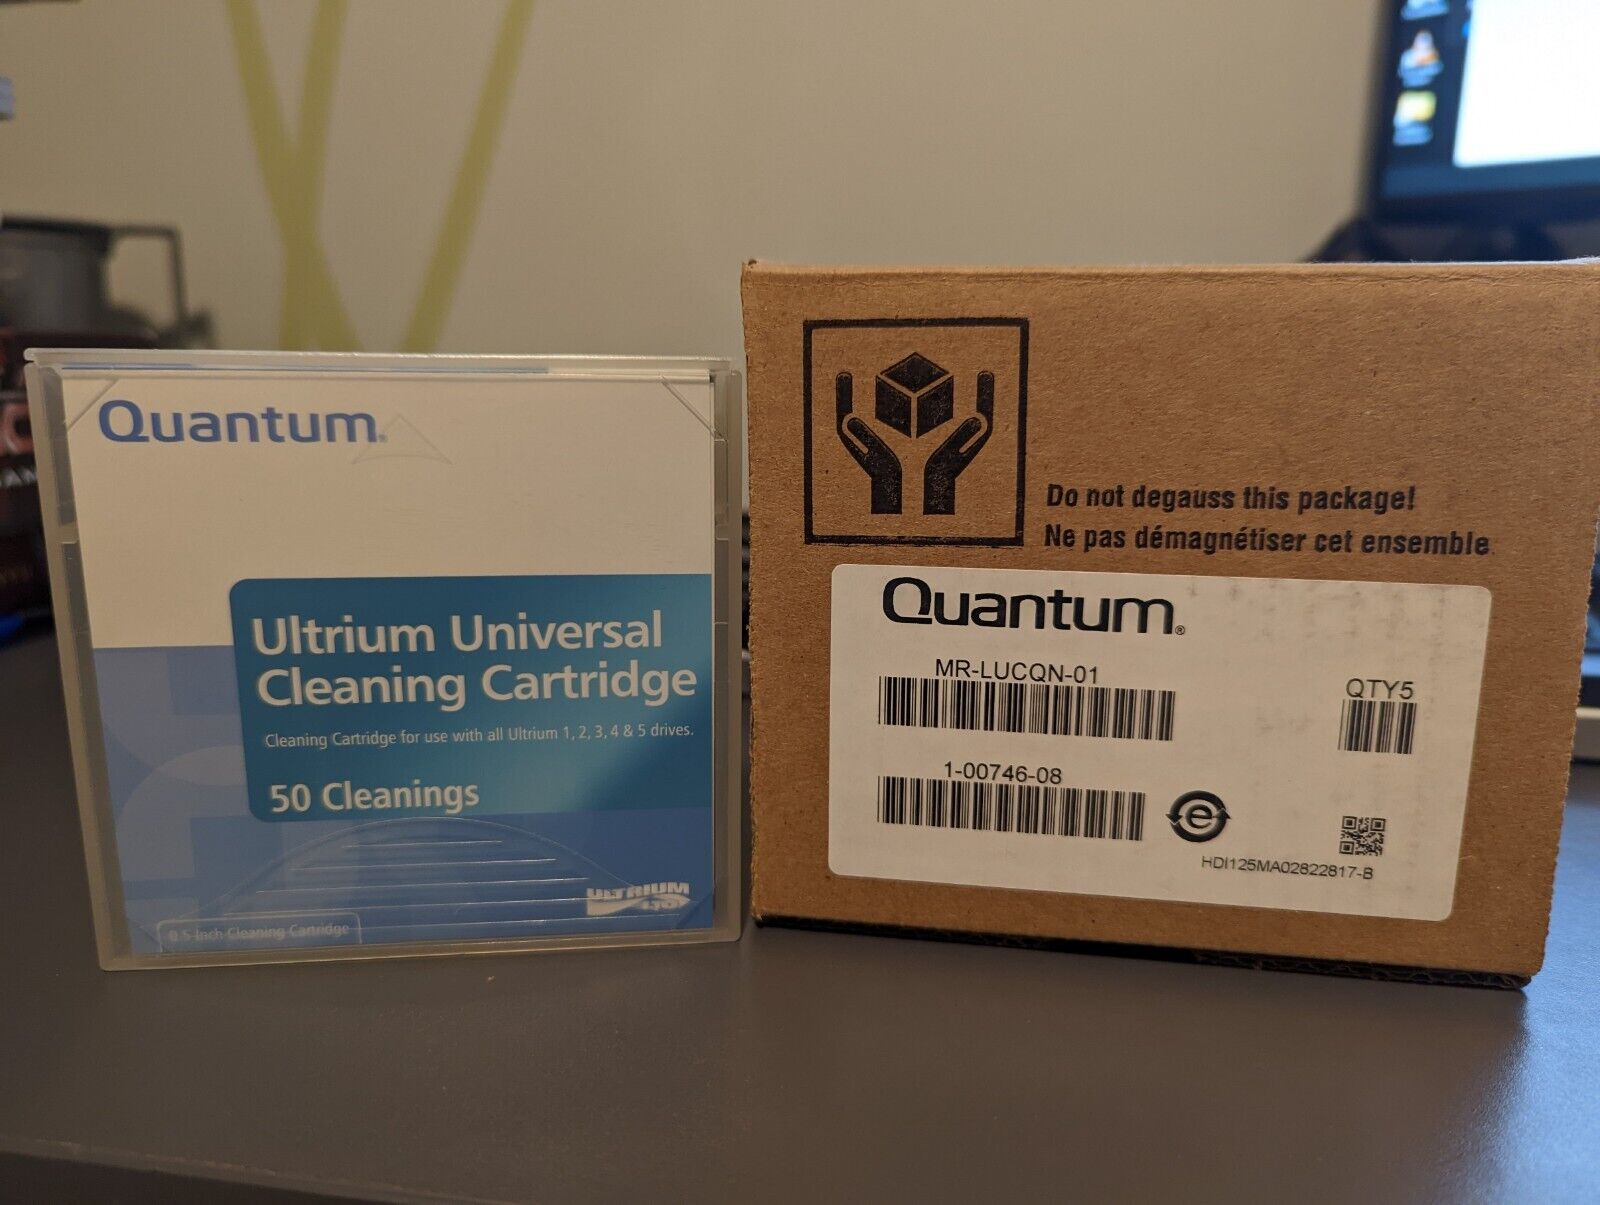 Pack of 5 Quantum Ultrium Universal Cleaning Cartridges (MR-LUCQN-01), 0.5 inch